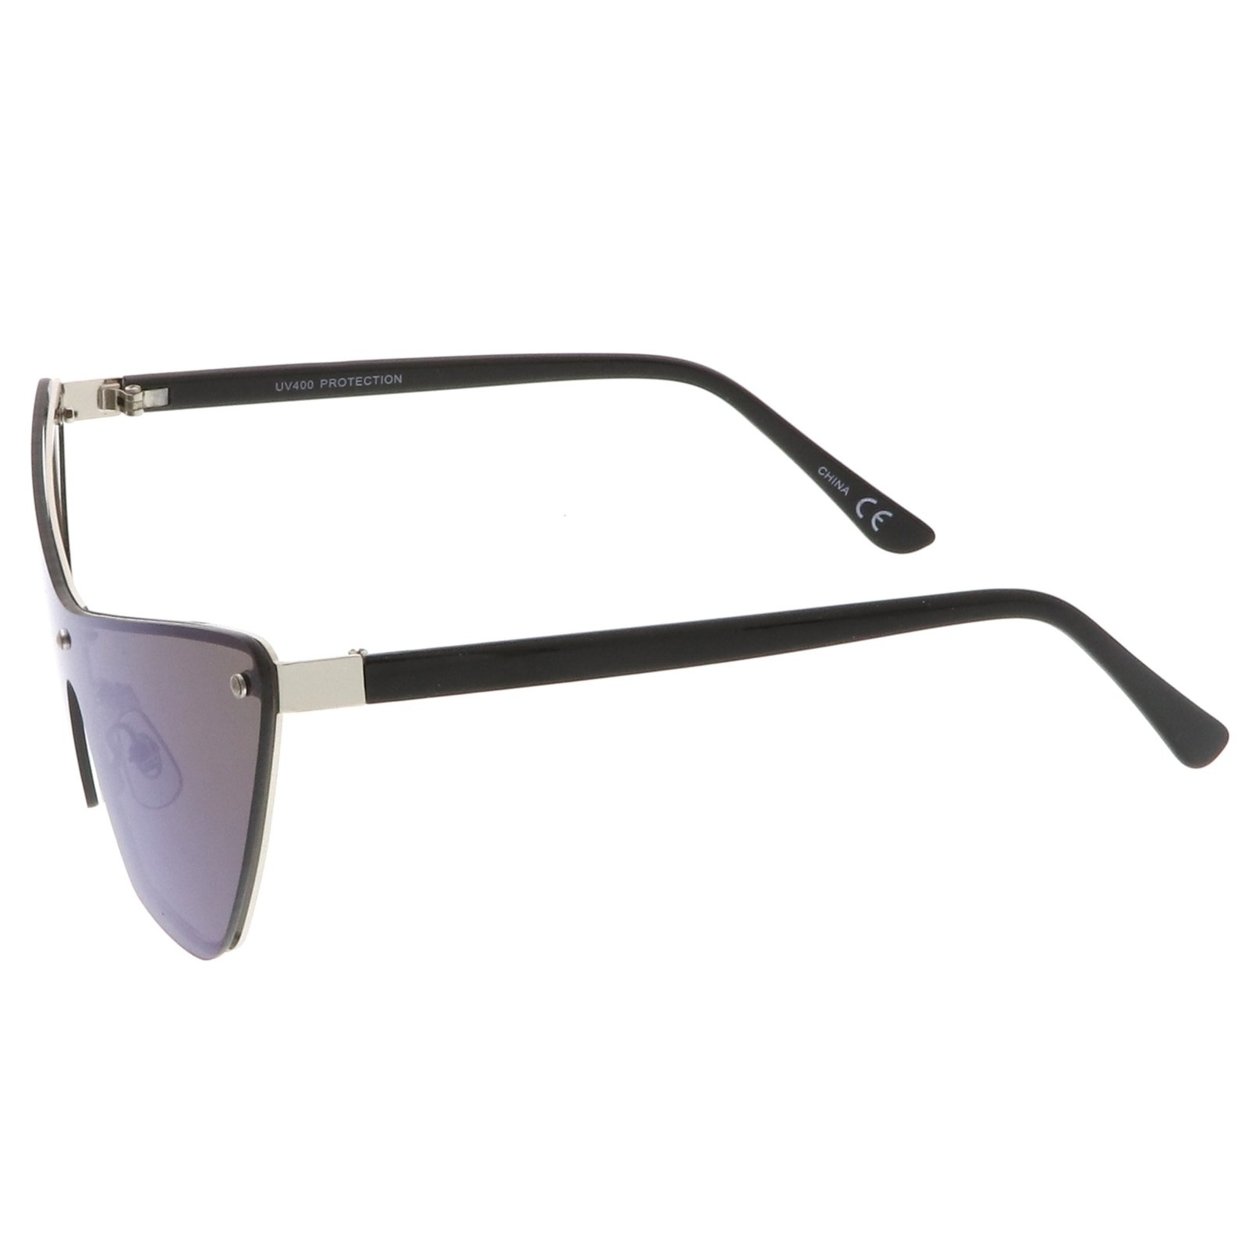 Oversize Rimless Colored Mirror Mono Lens Shield Cat Eye Sunglasses 68mm - Silver Black / Blue Mirror